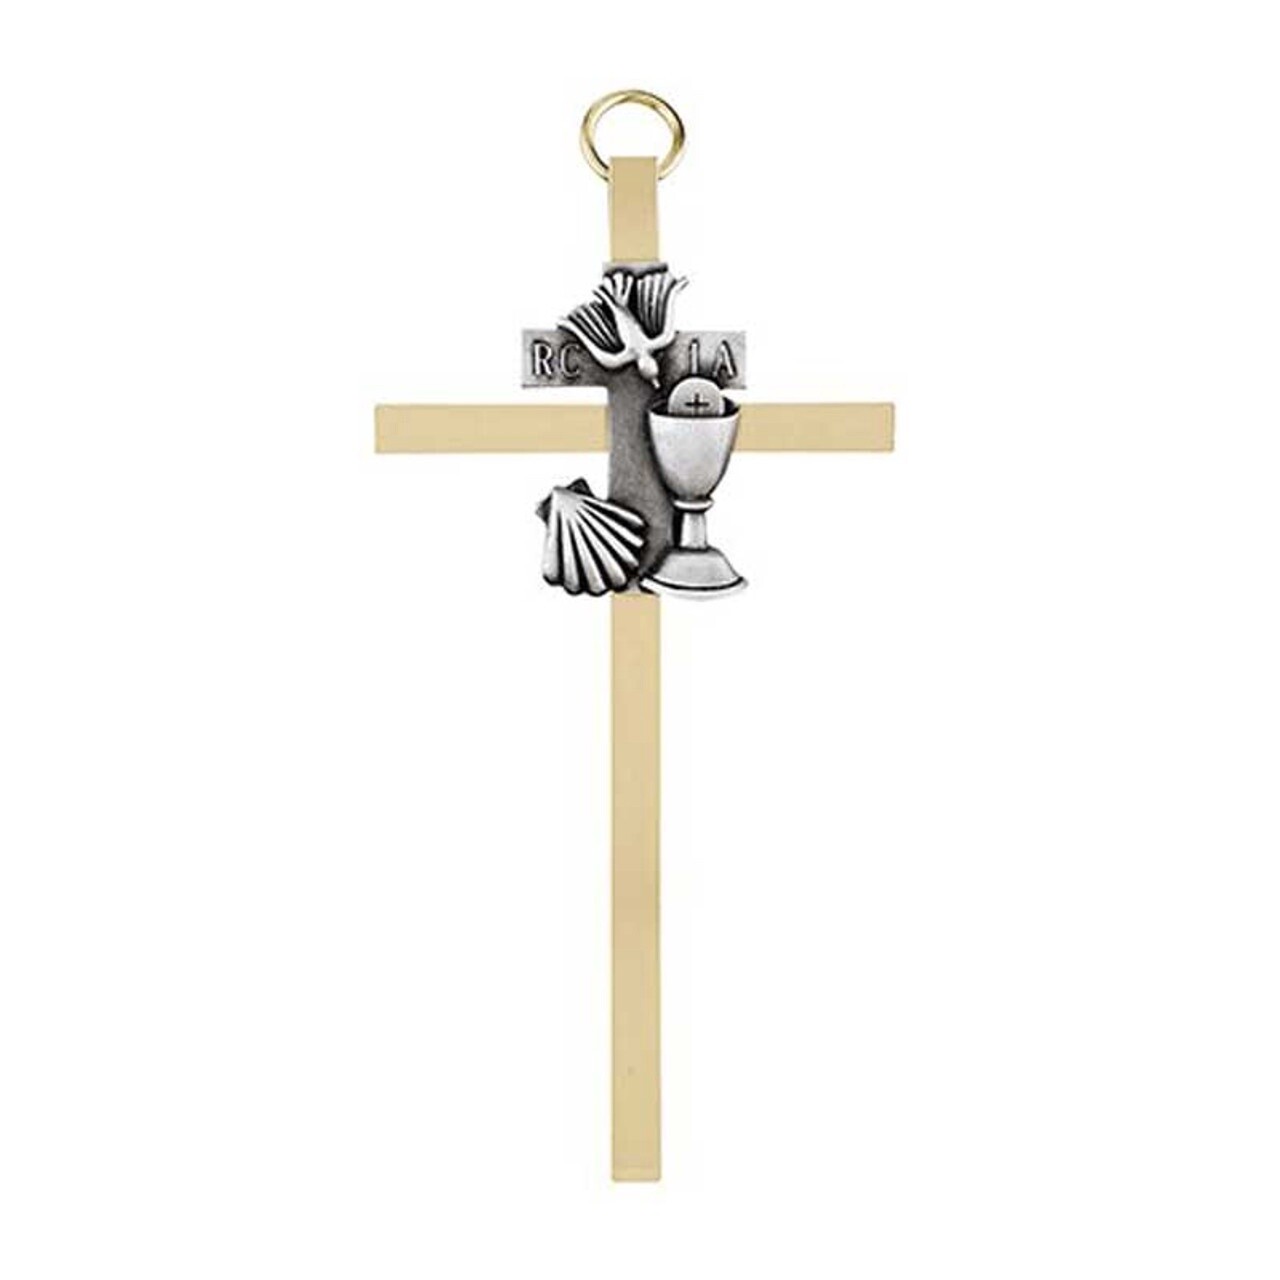 4.25&quot; H Brass Cross with Emblem - RCIA